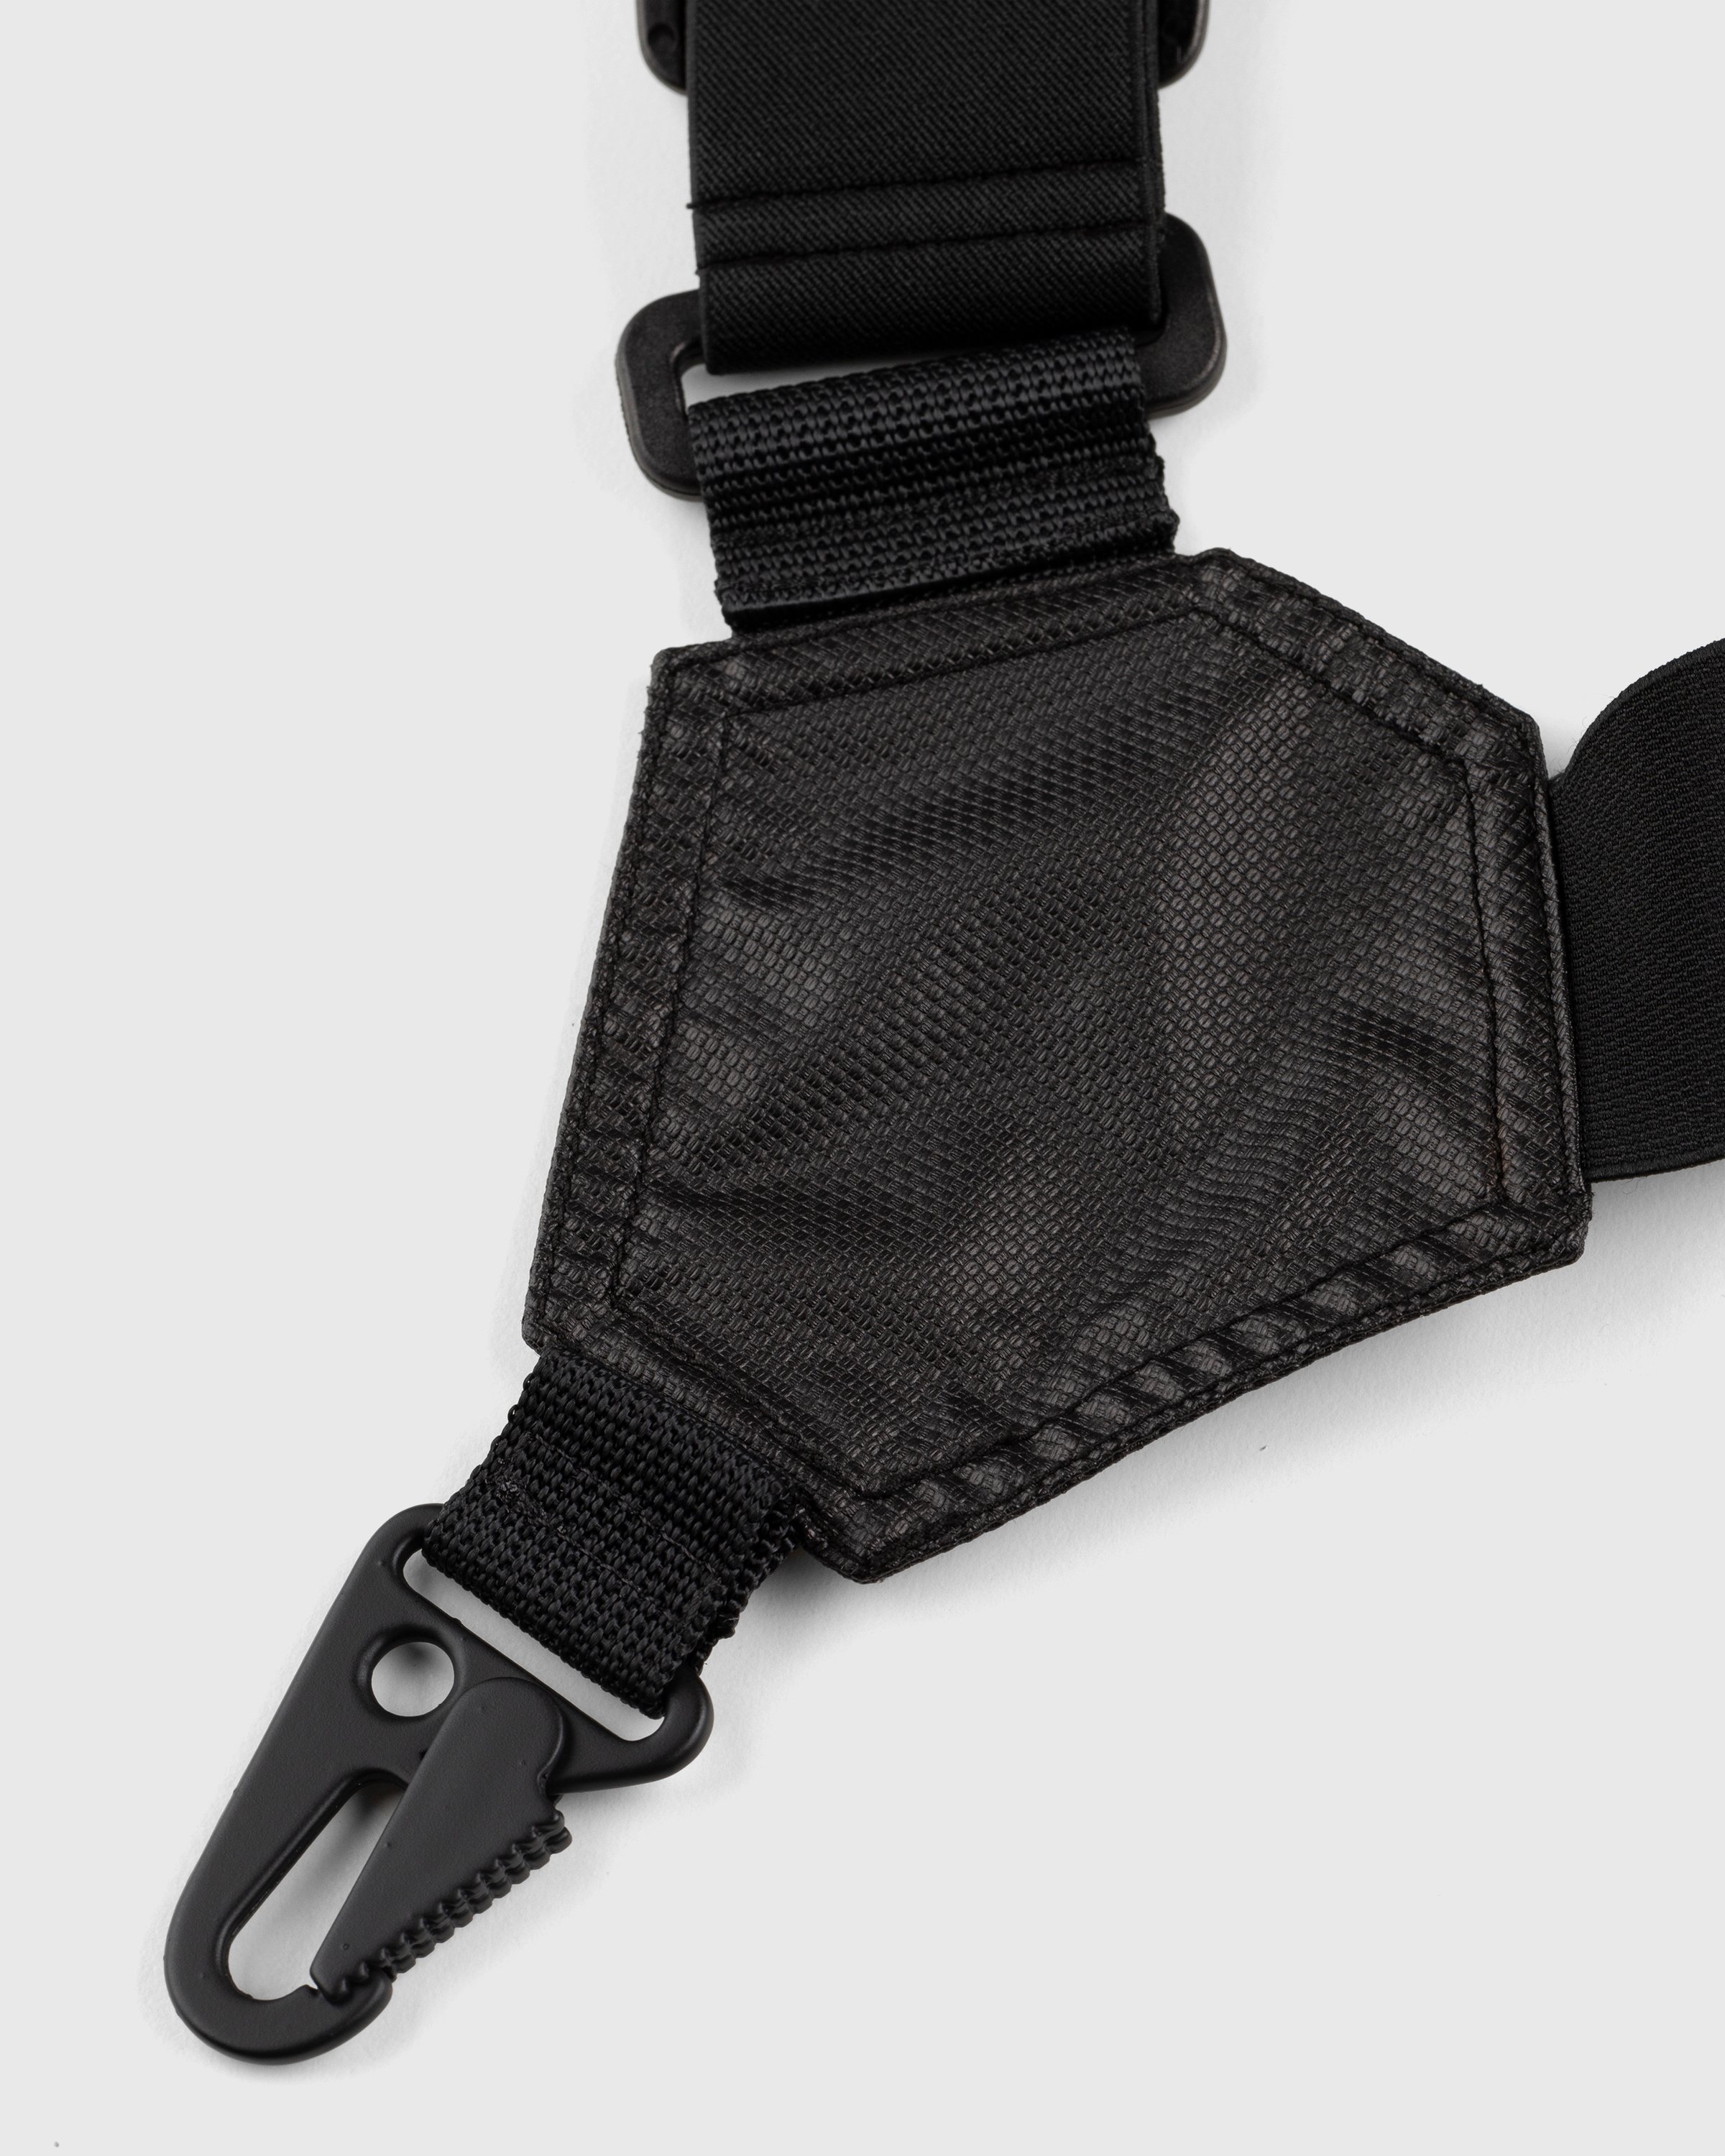 Stone Island - 96070 Cotton Suspenders Black - Accessories - Black - Image 3